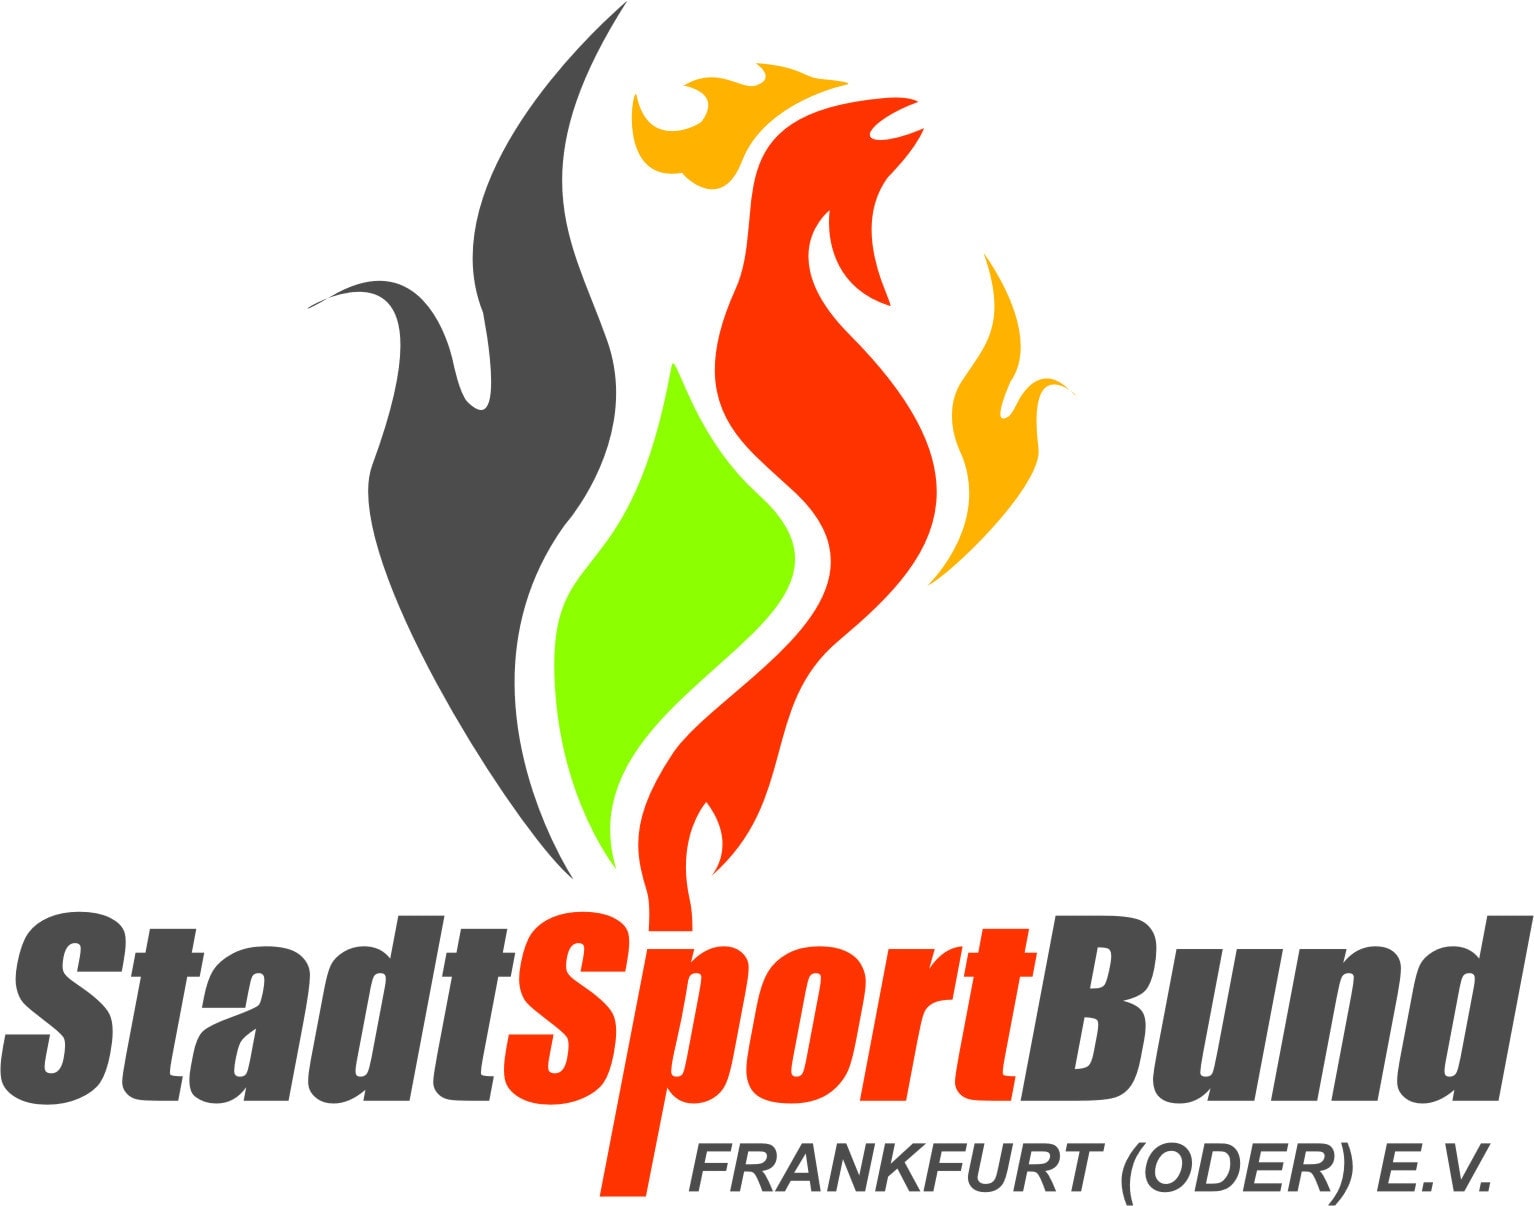 StadtSportBund Frankfurt (Oder) e.V